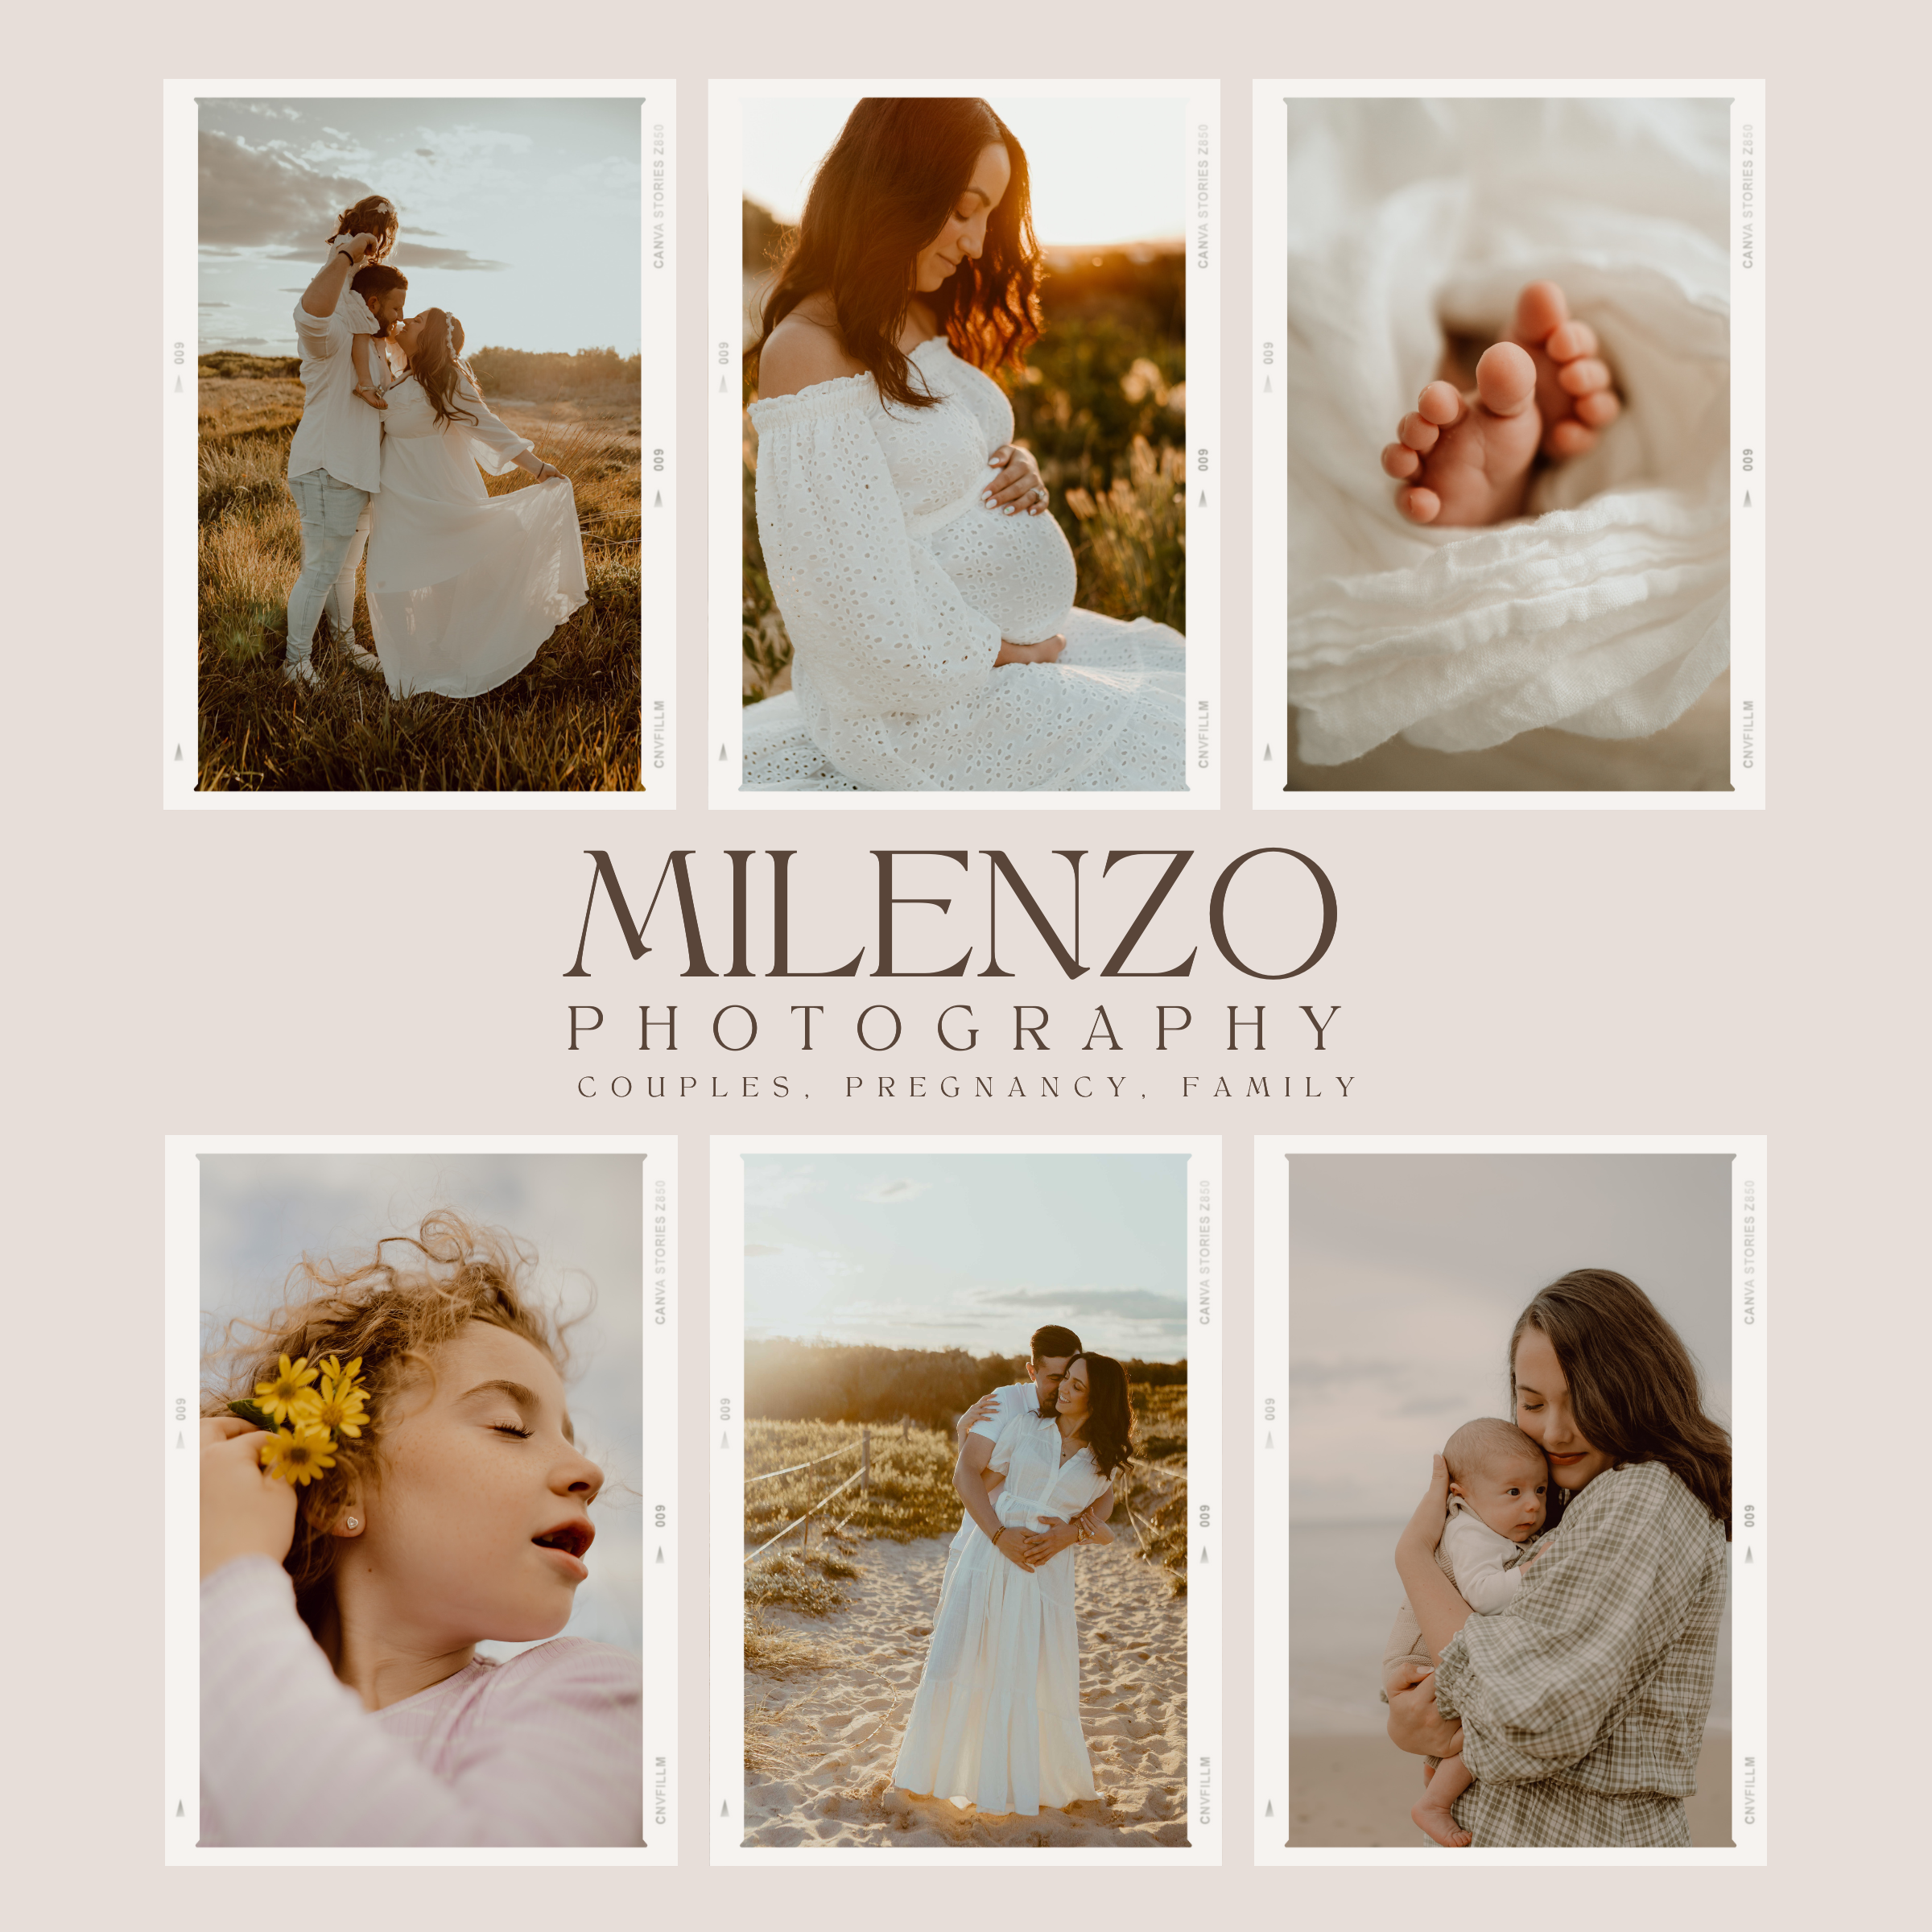 Milenzo Photography – Couples, Pregnancy & Family Photographer